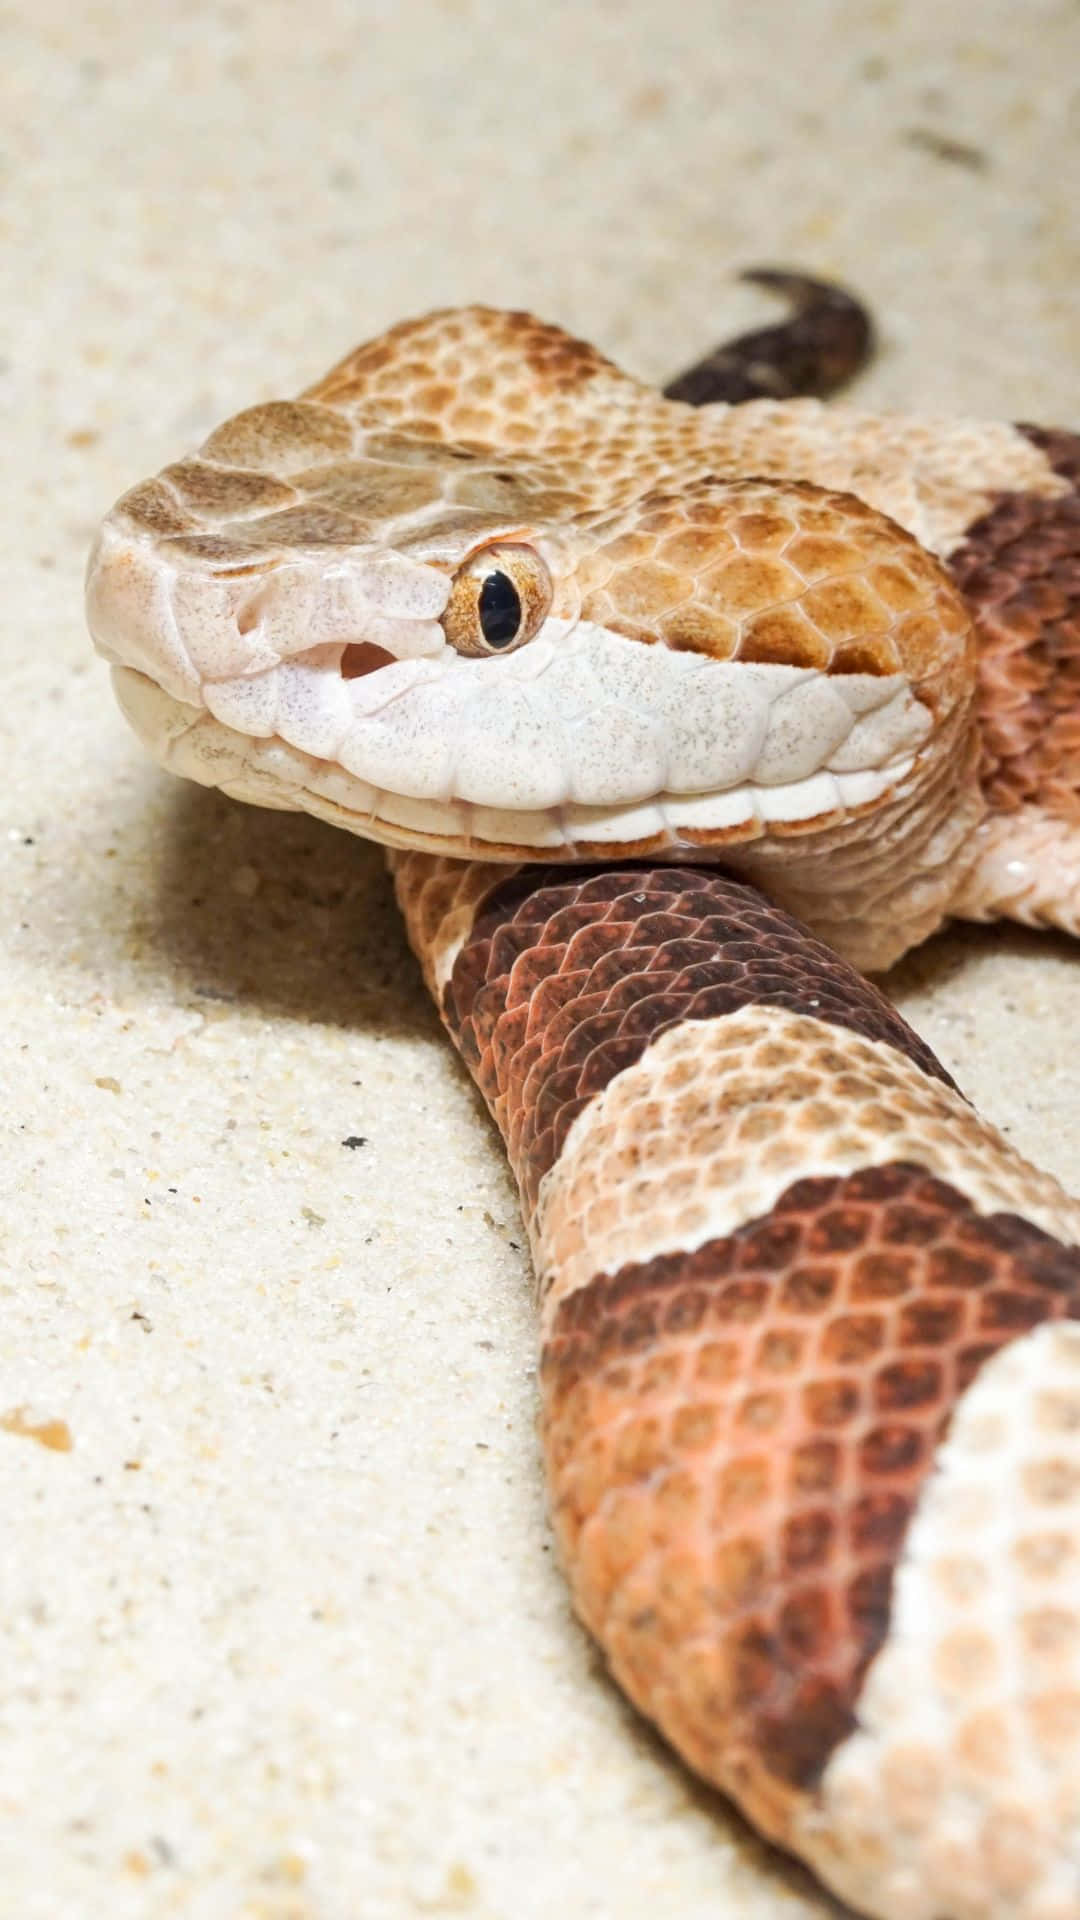 “a Slithering Snake In Its Natural Habitat” Background